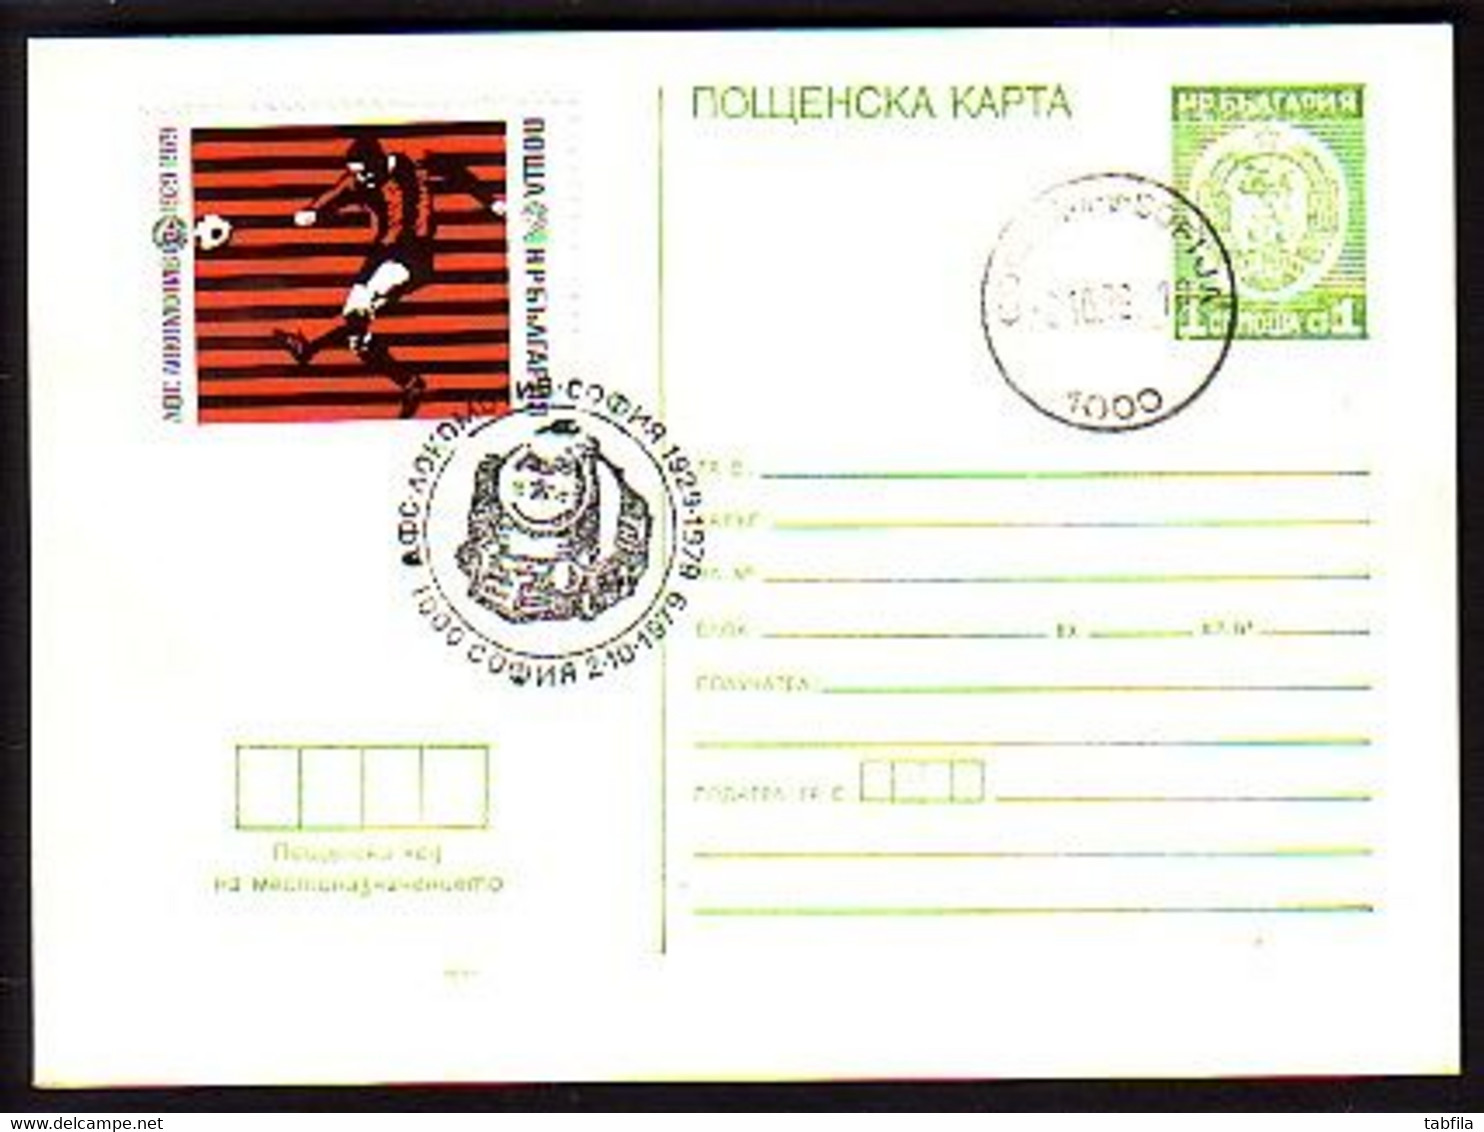 BULGARIA - 1979 - P.card Footbale Cloub Locomotiv Travel - Postcards